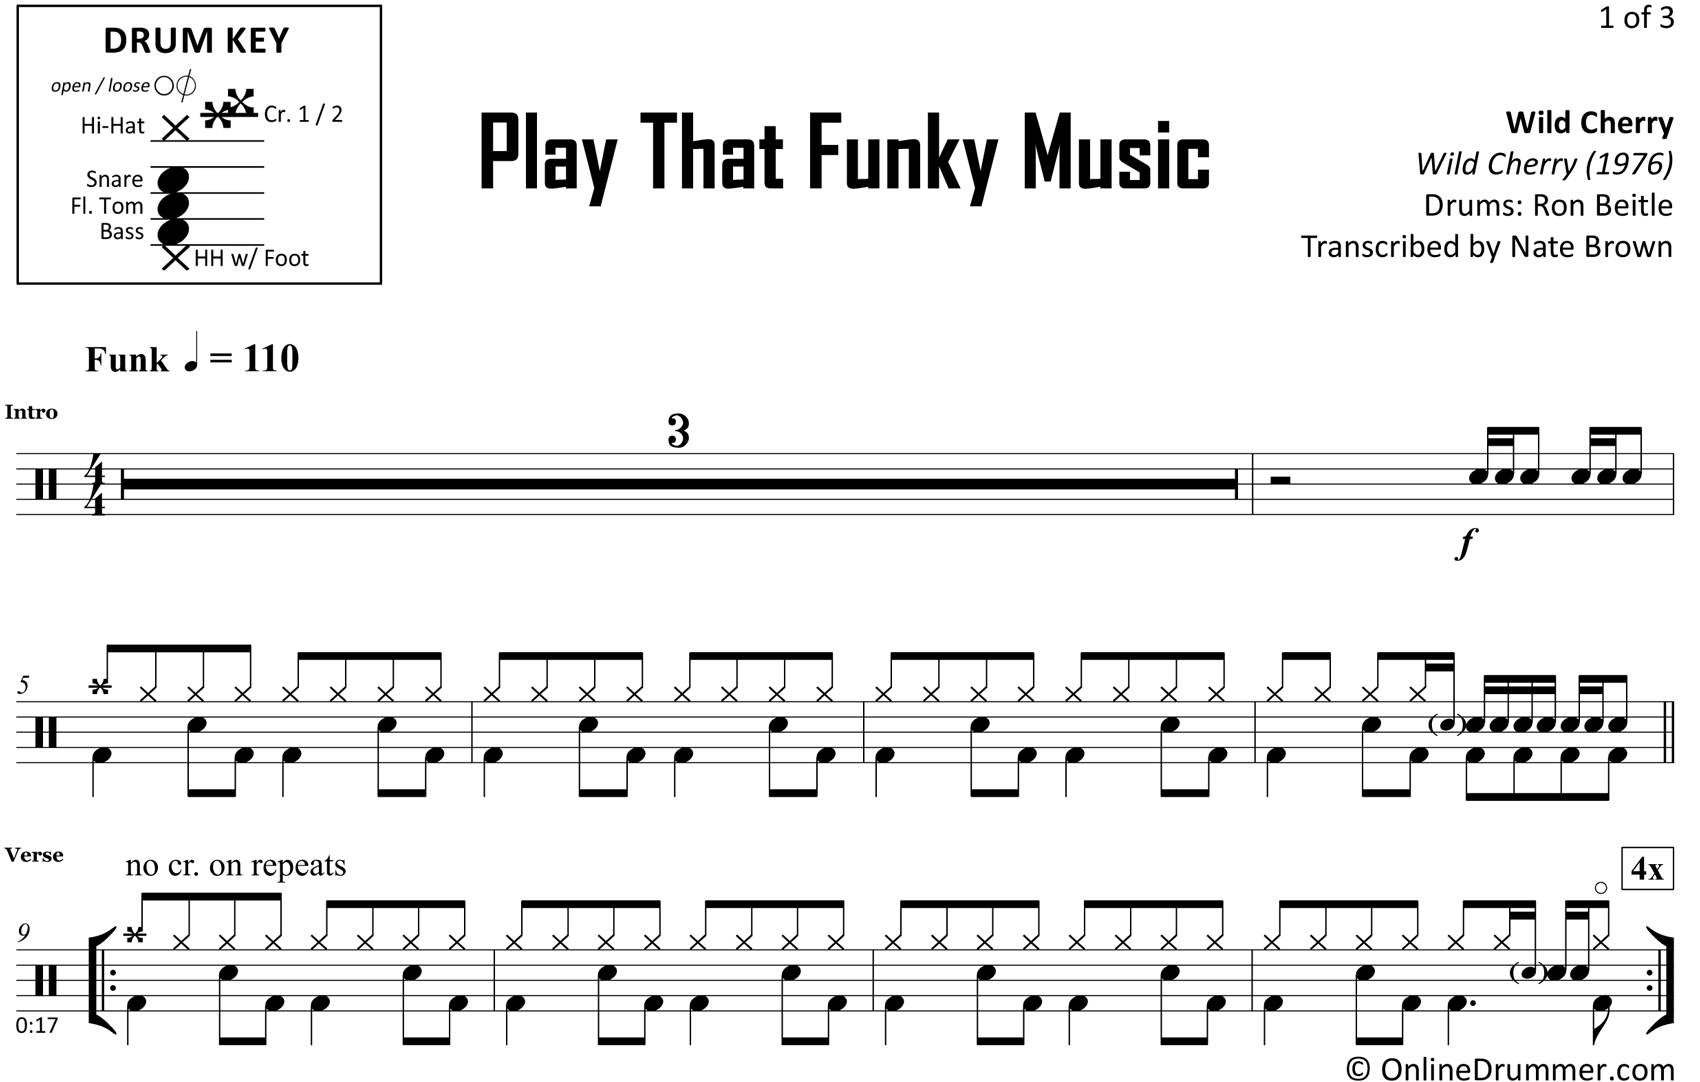 Play That Funky Music - Wild Cherry - Drum Sheet Music